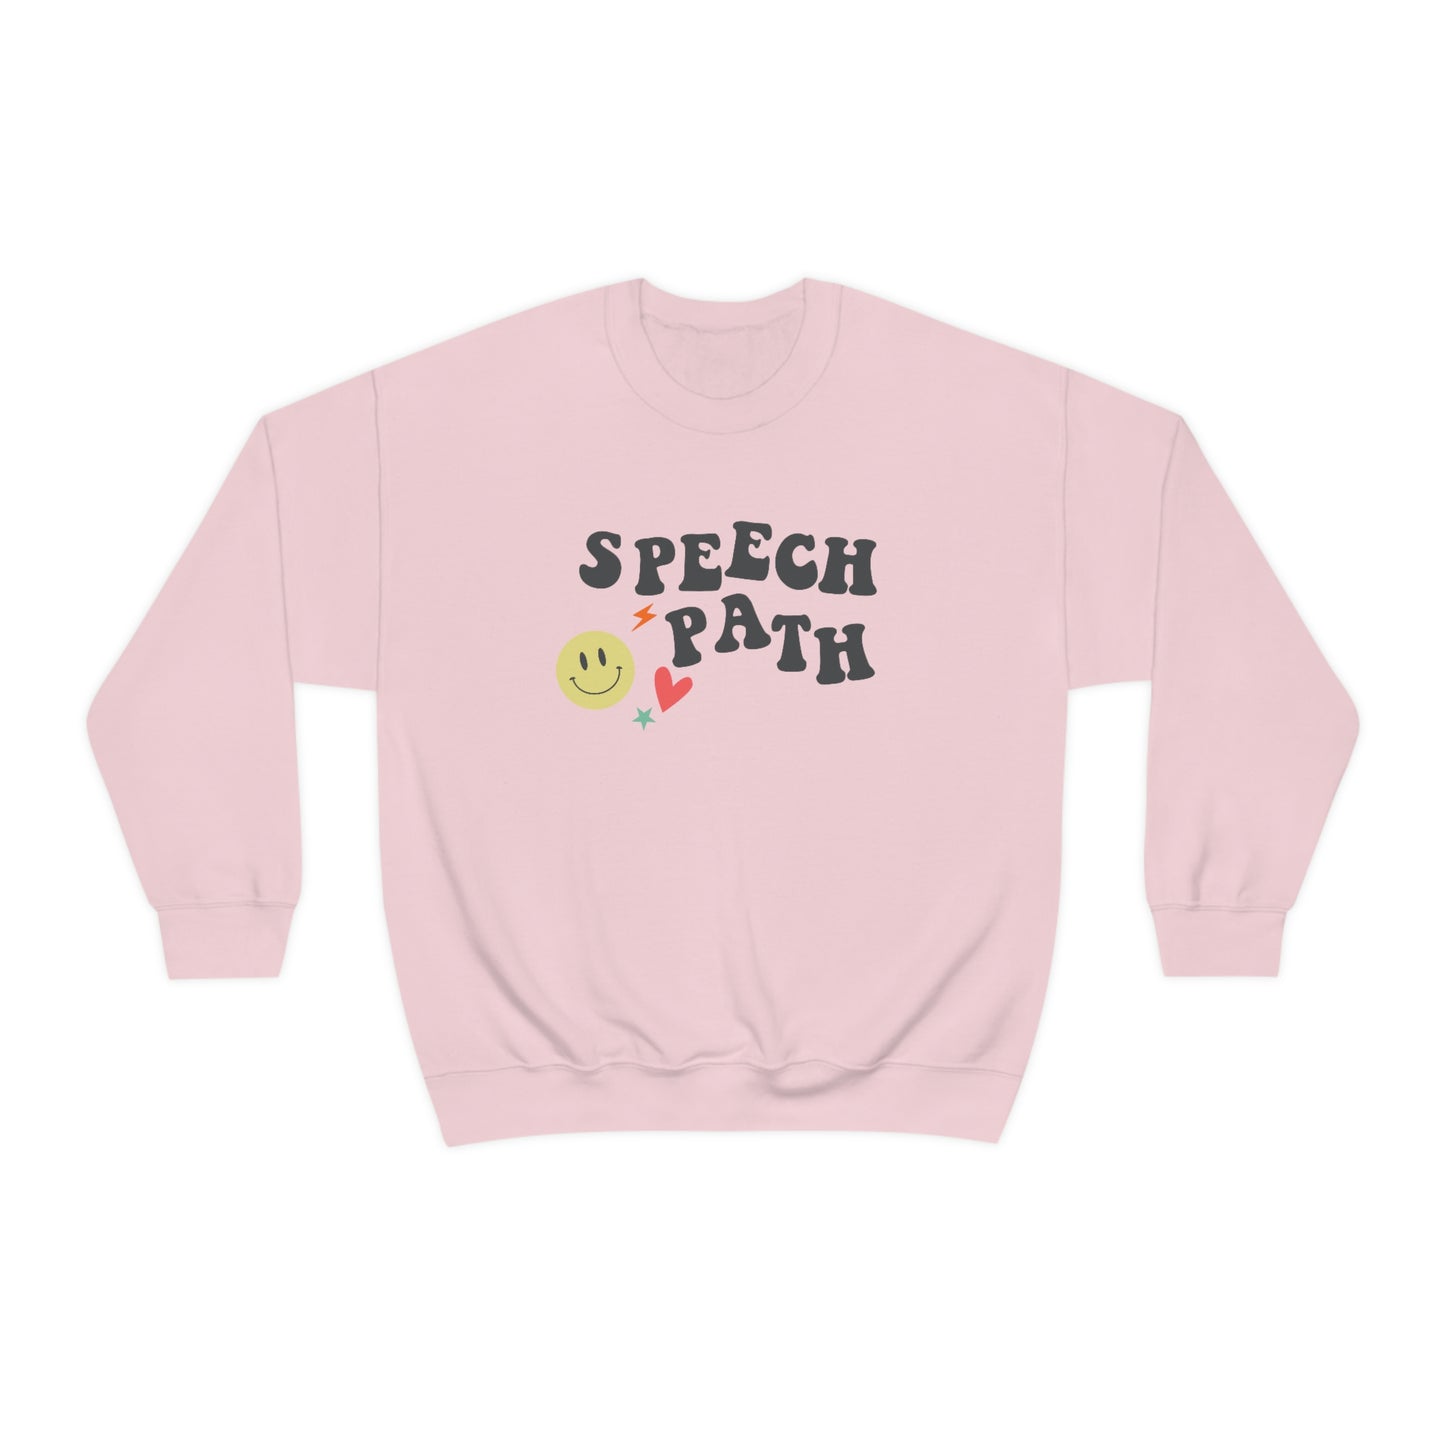 Speech Path Crewneck Sweatshirt